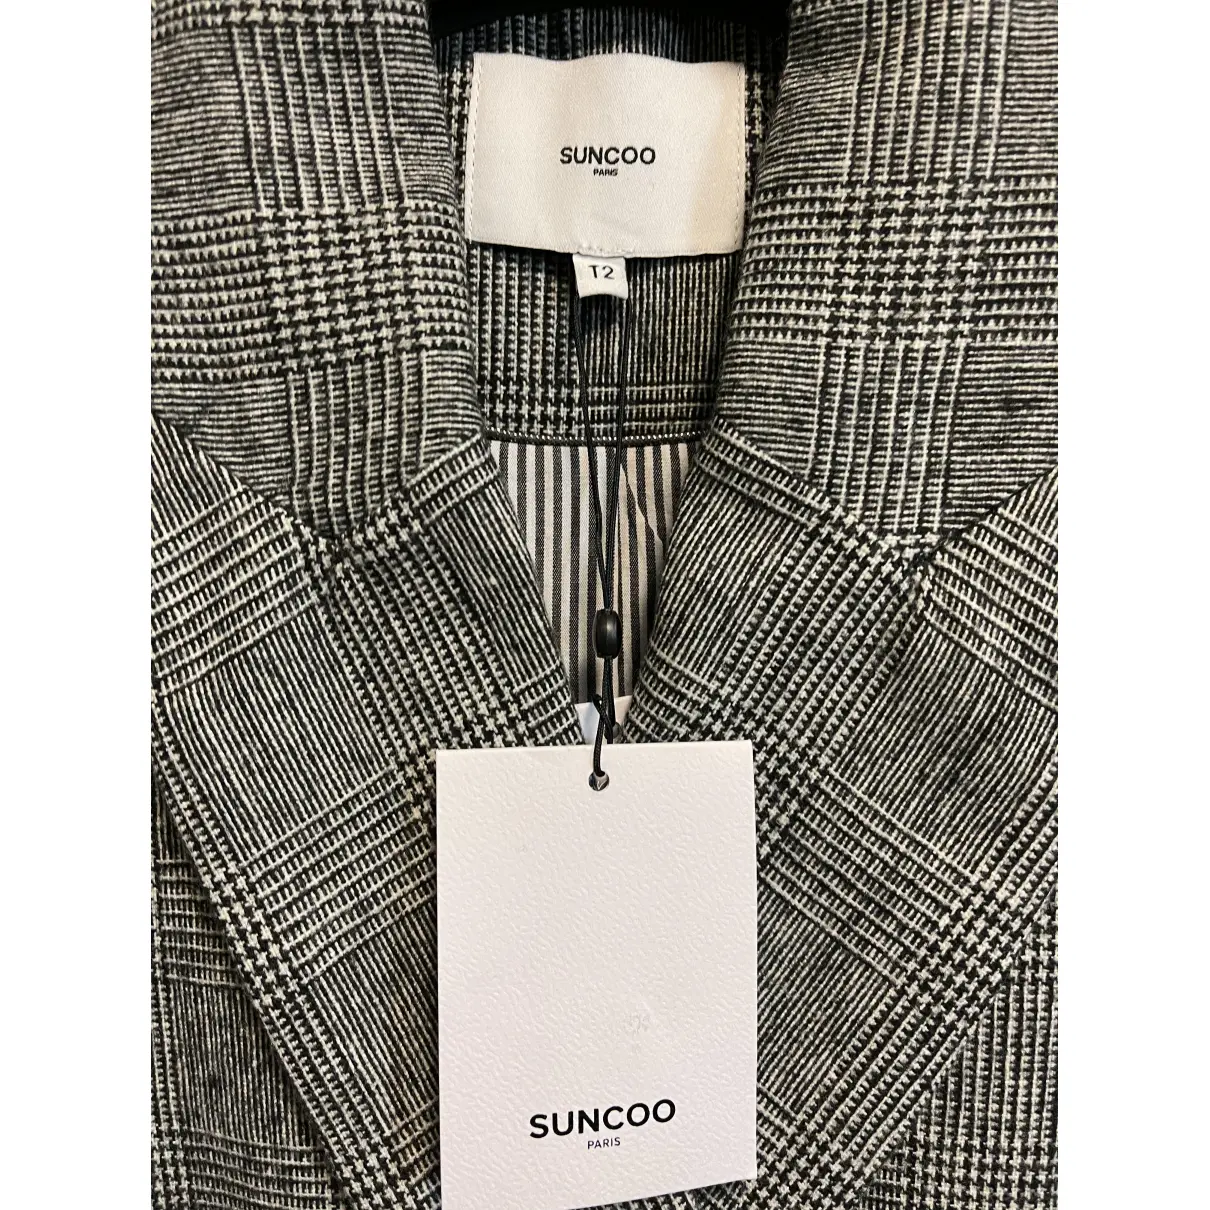 Buy Suncoo Blazer online